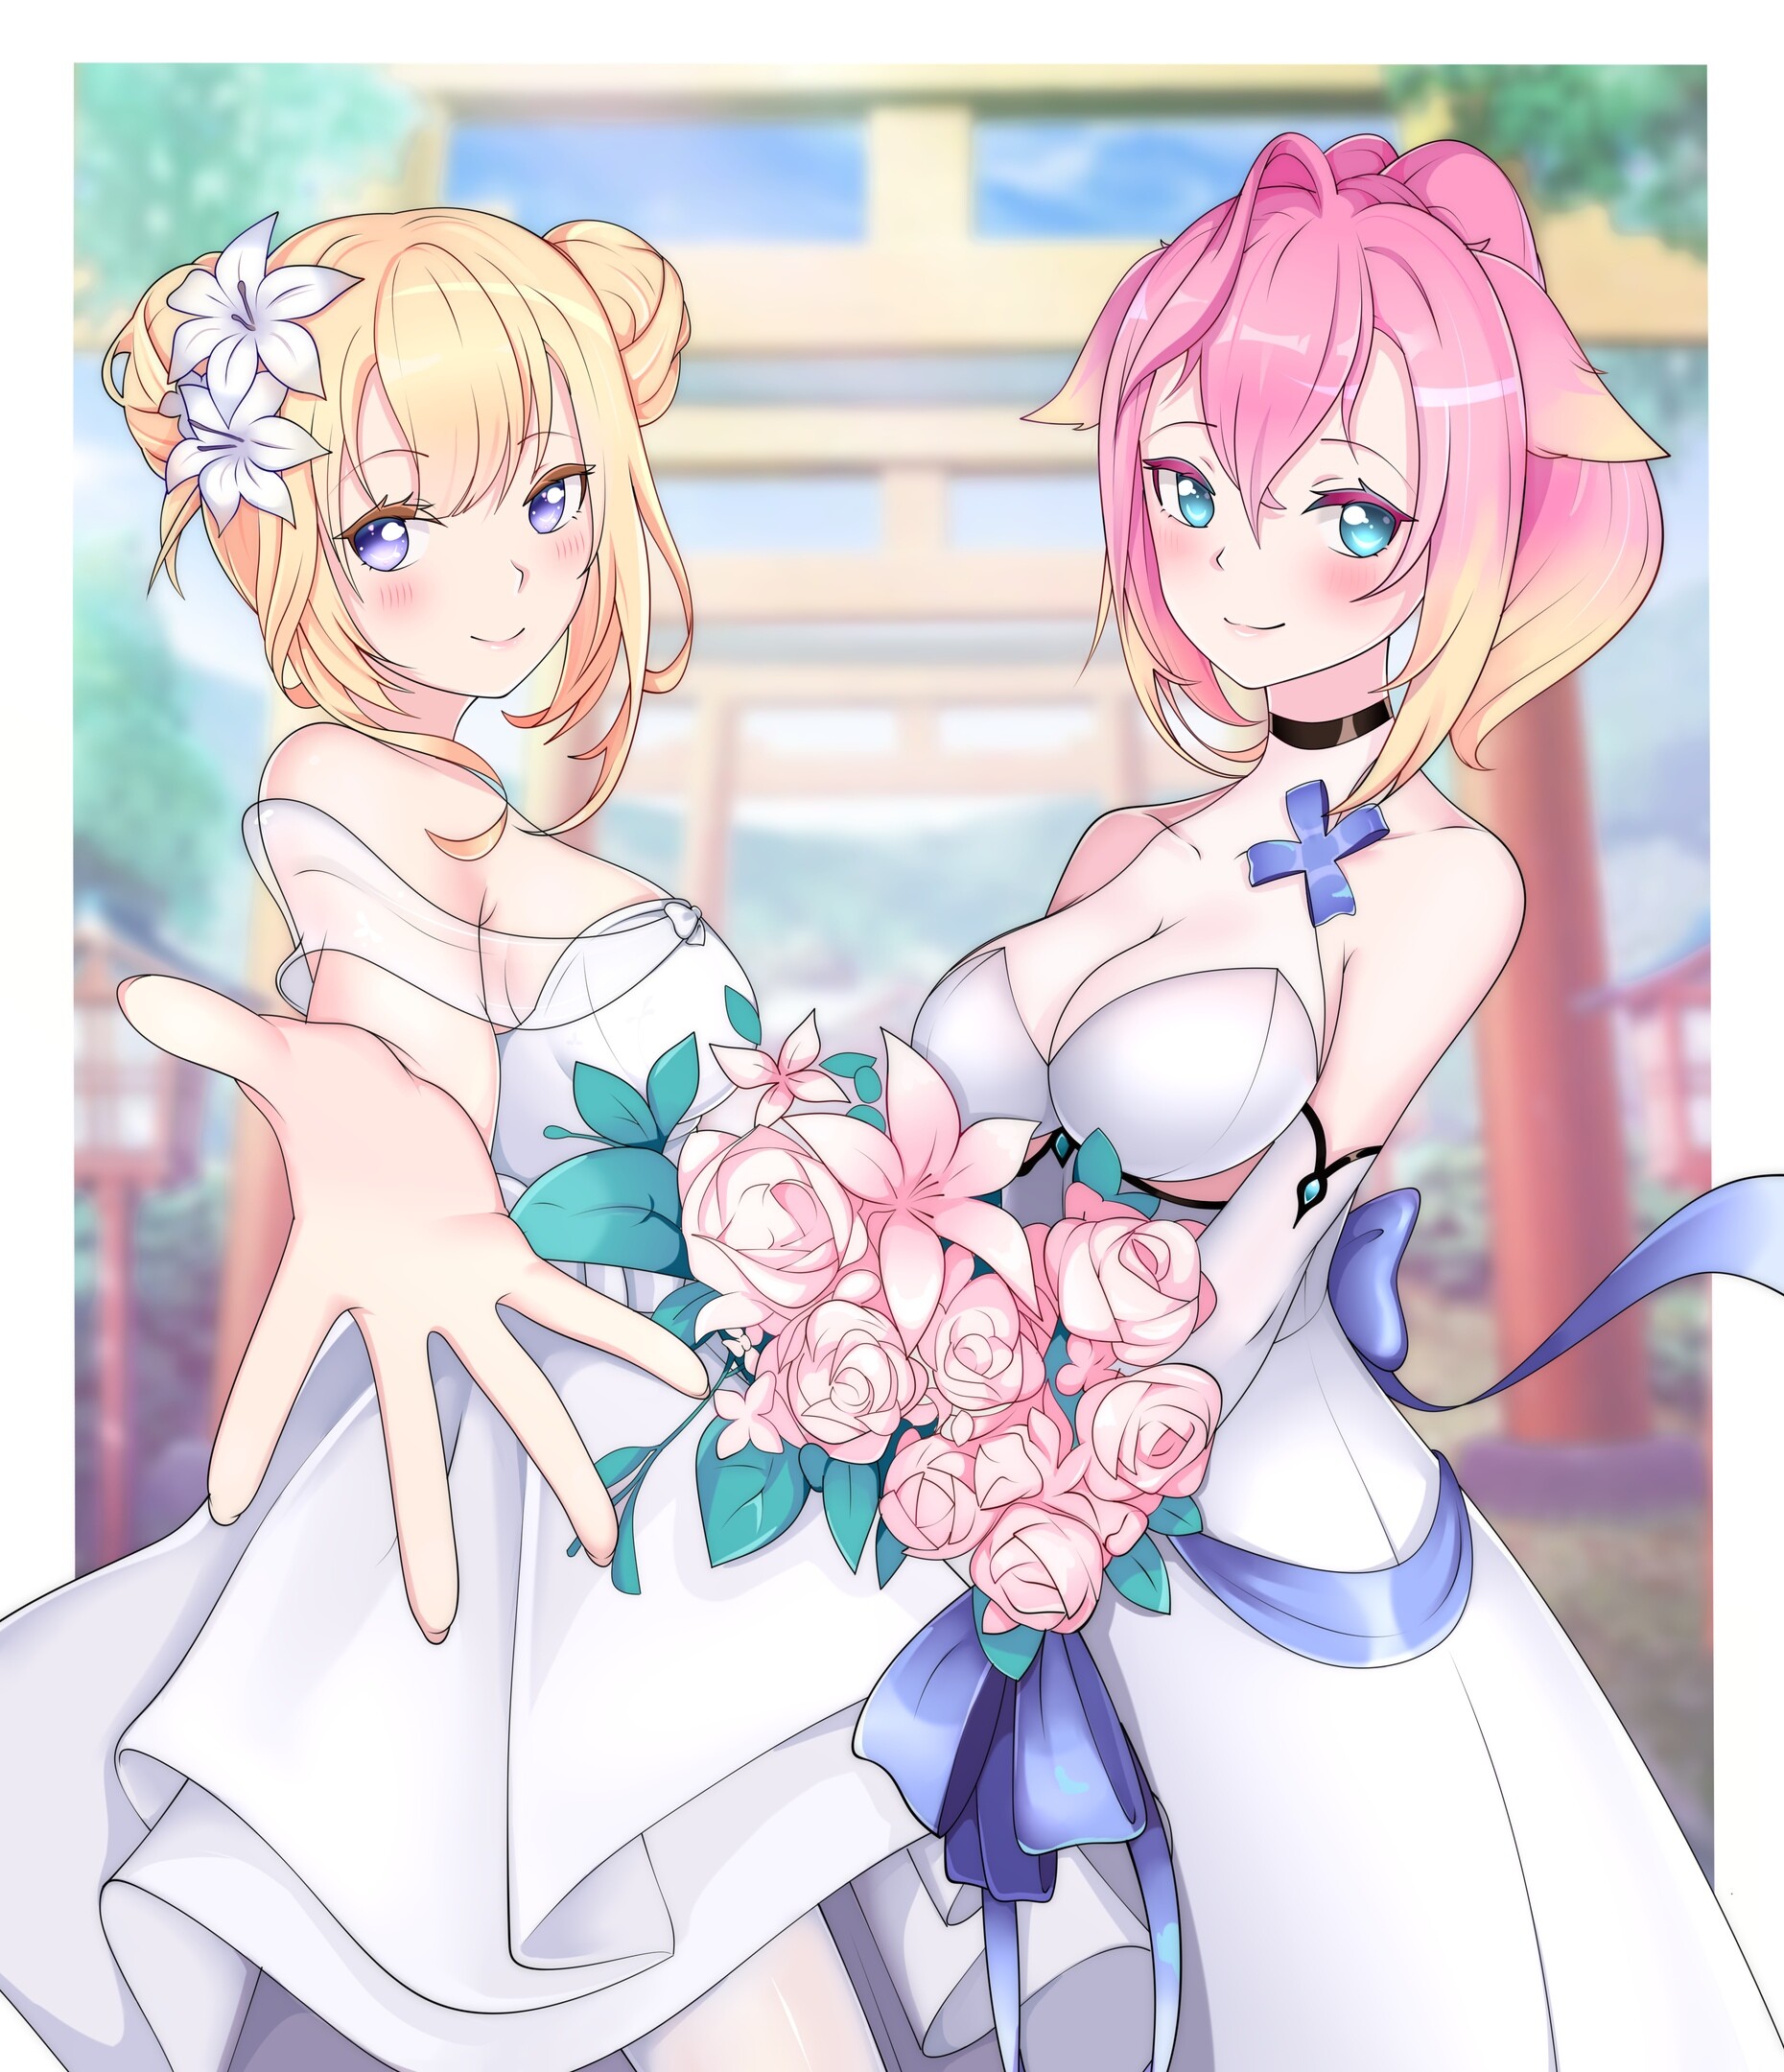 ArtStation - Wedding anime girls